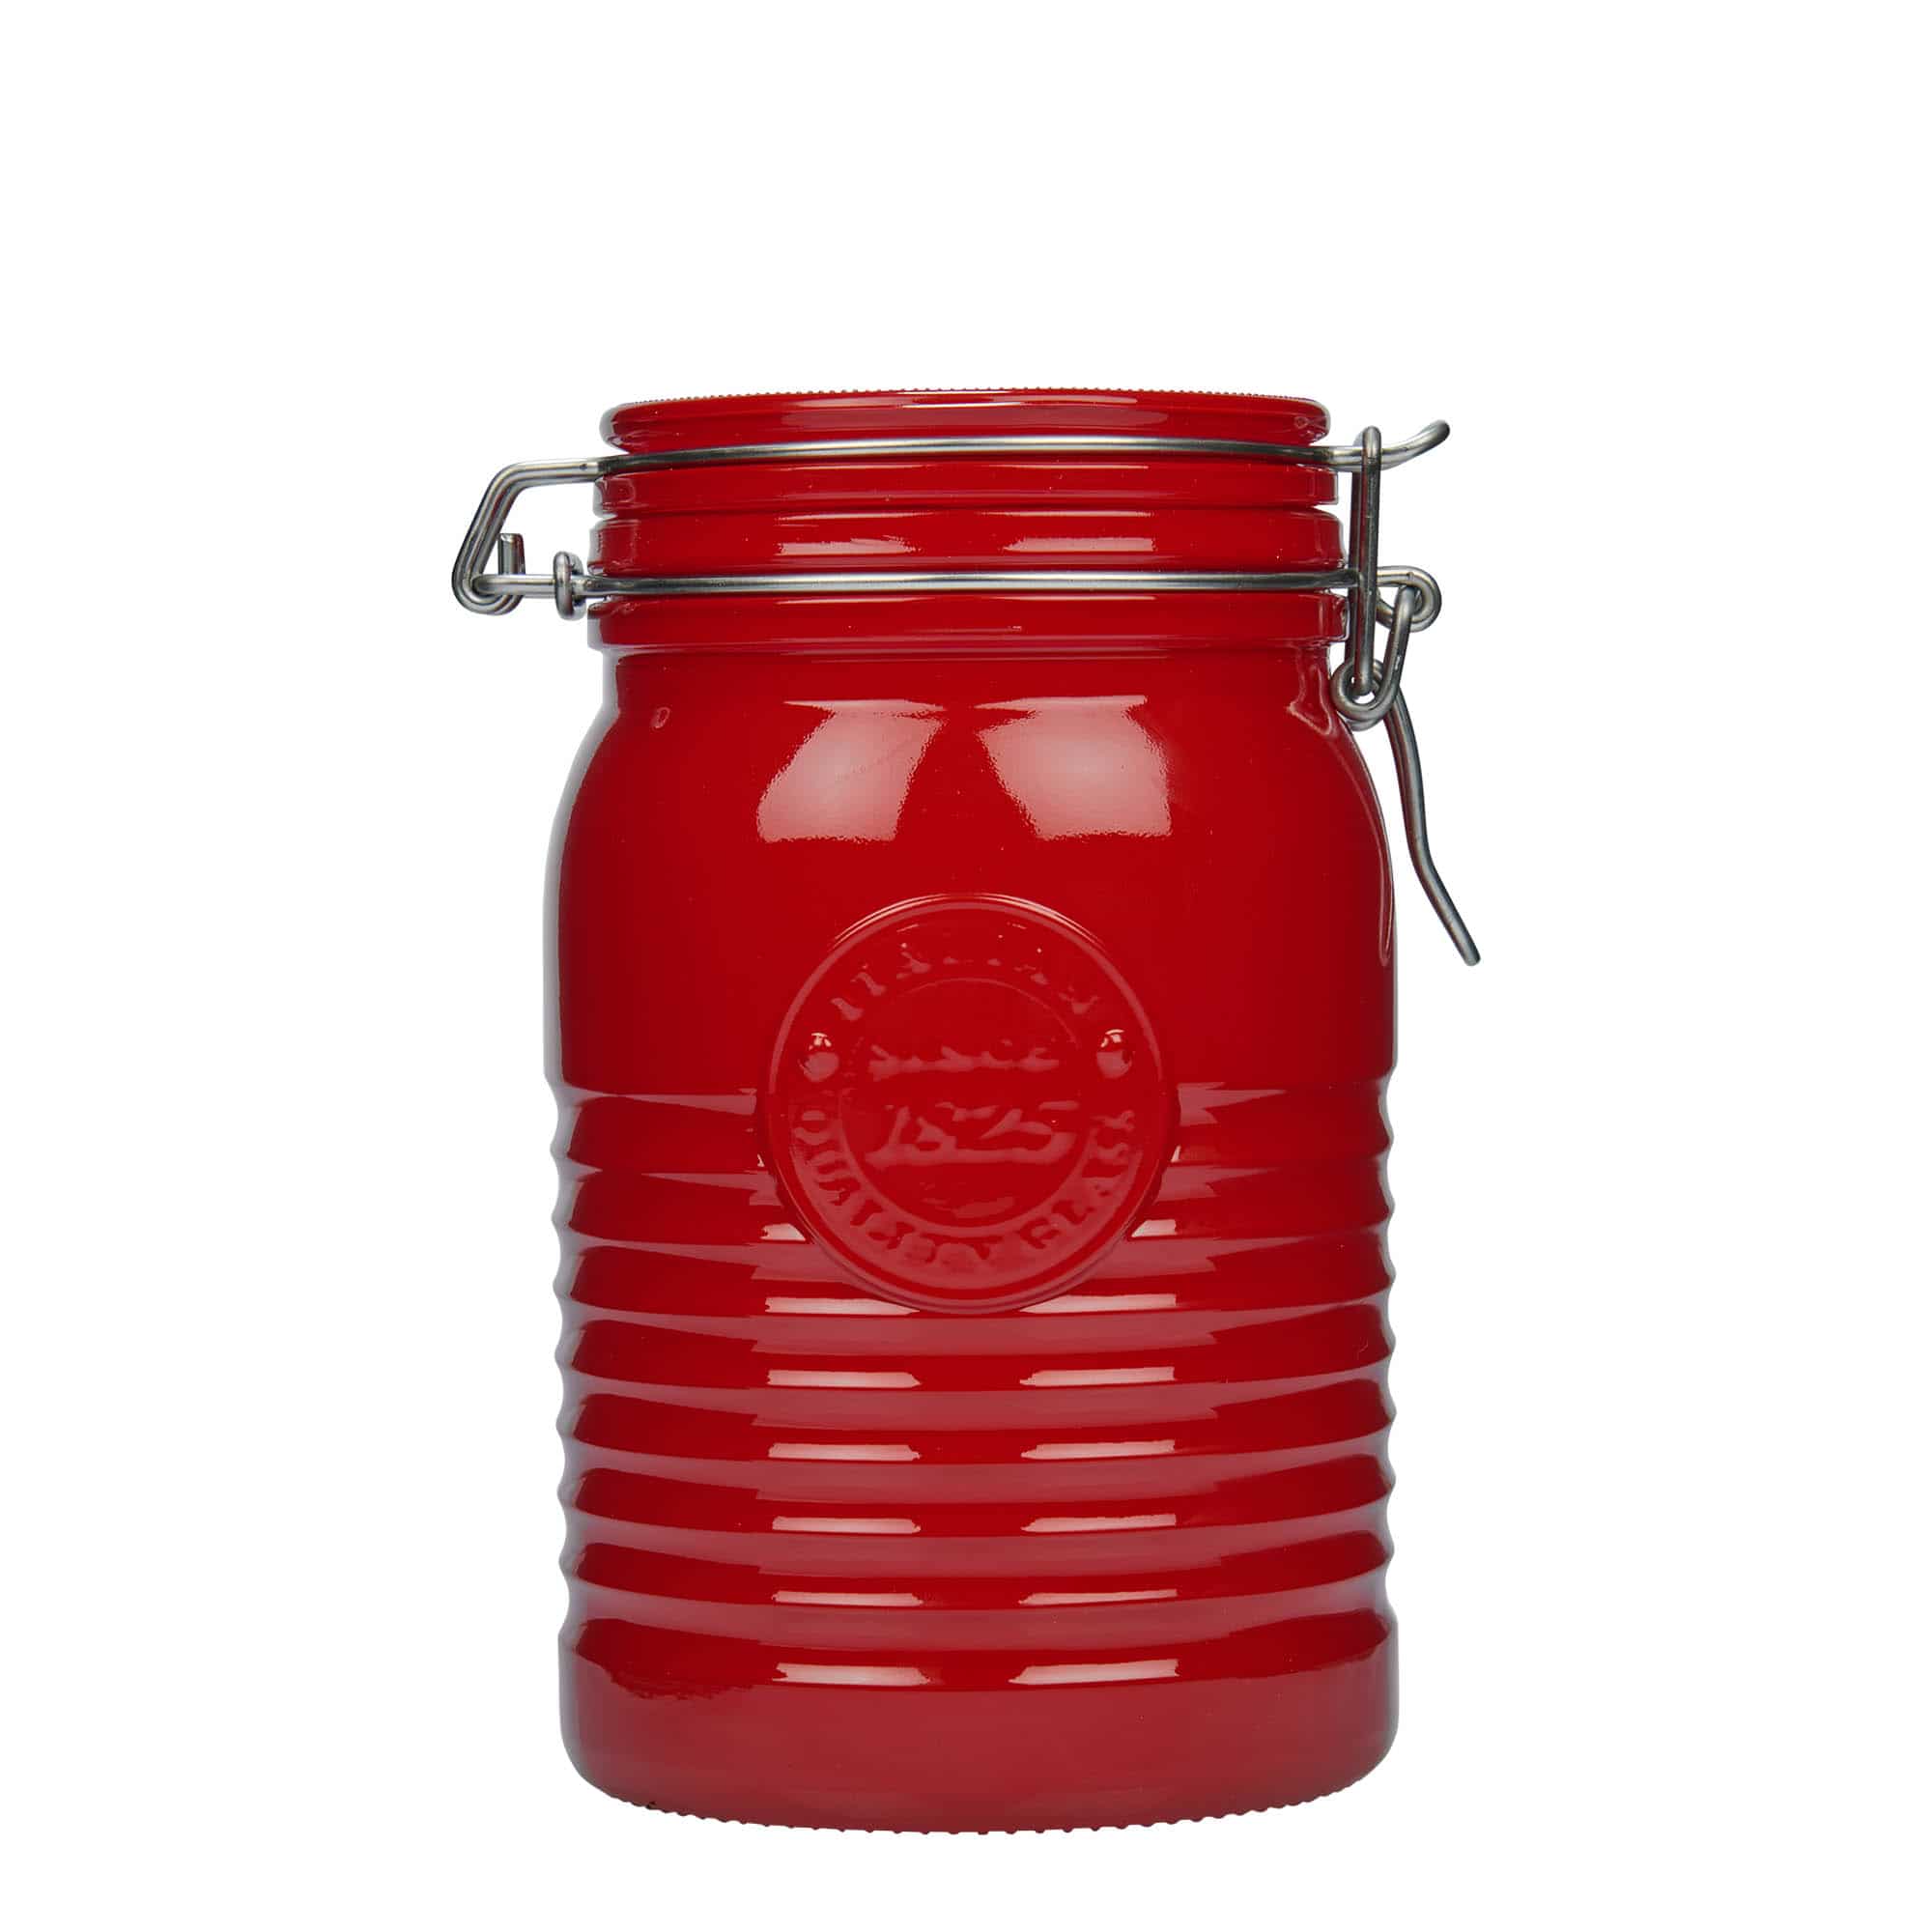 1.000 ml Drahtbügelglas 'Officina 1825', rot, Mündung: Drahtbügelverschluss